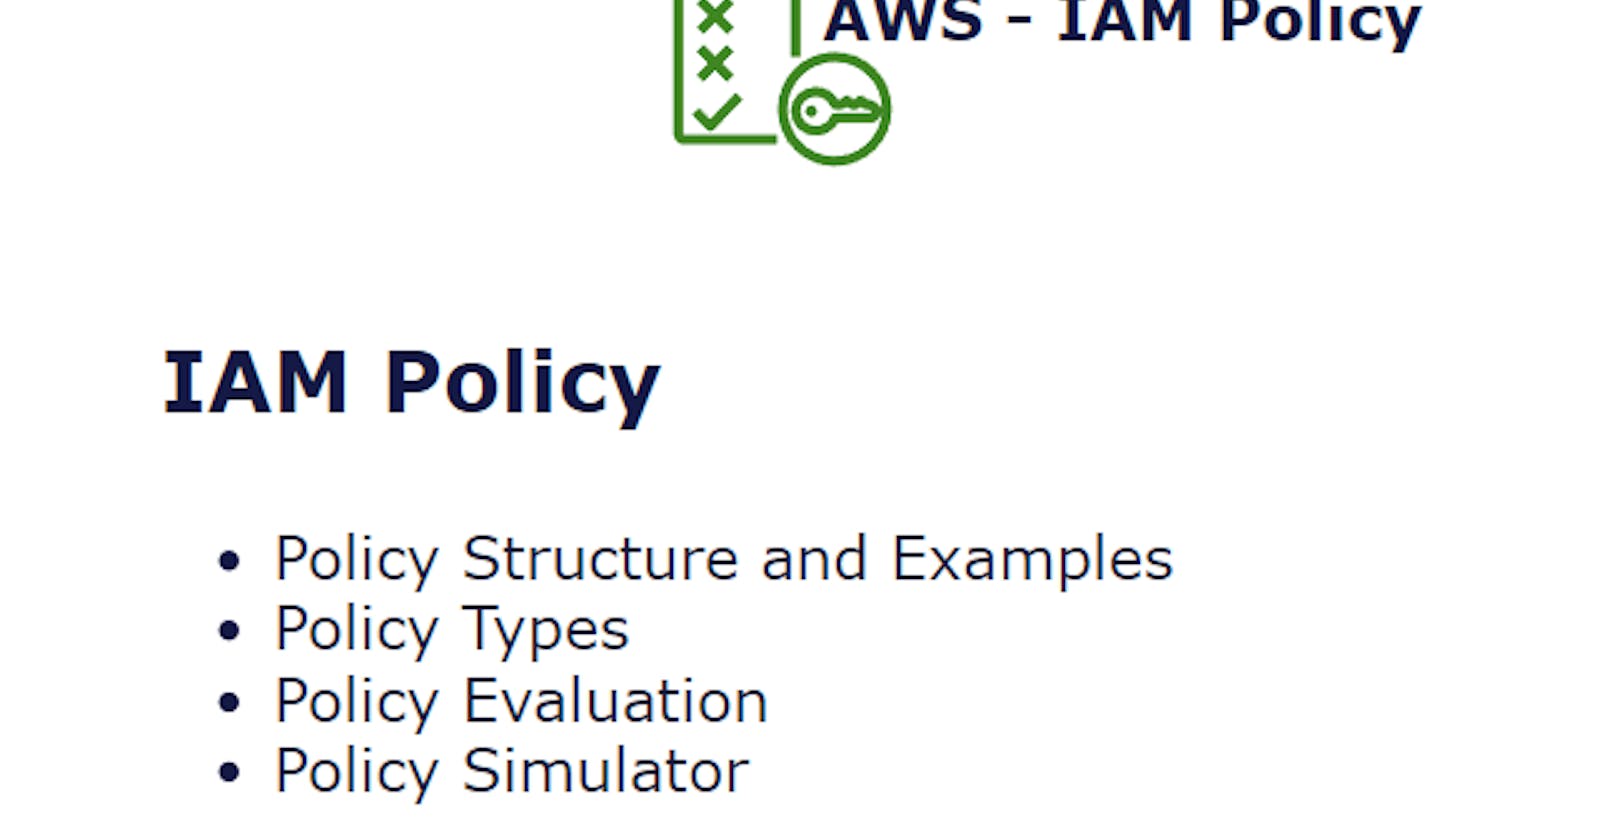 AWS - IAM Policy